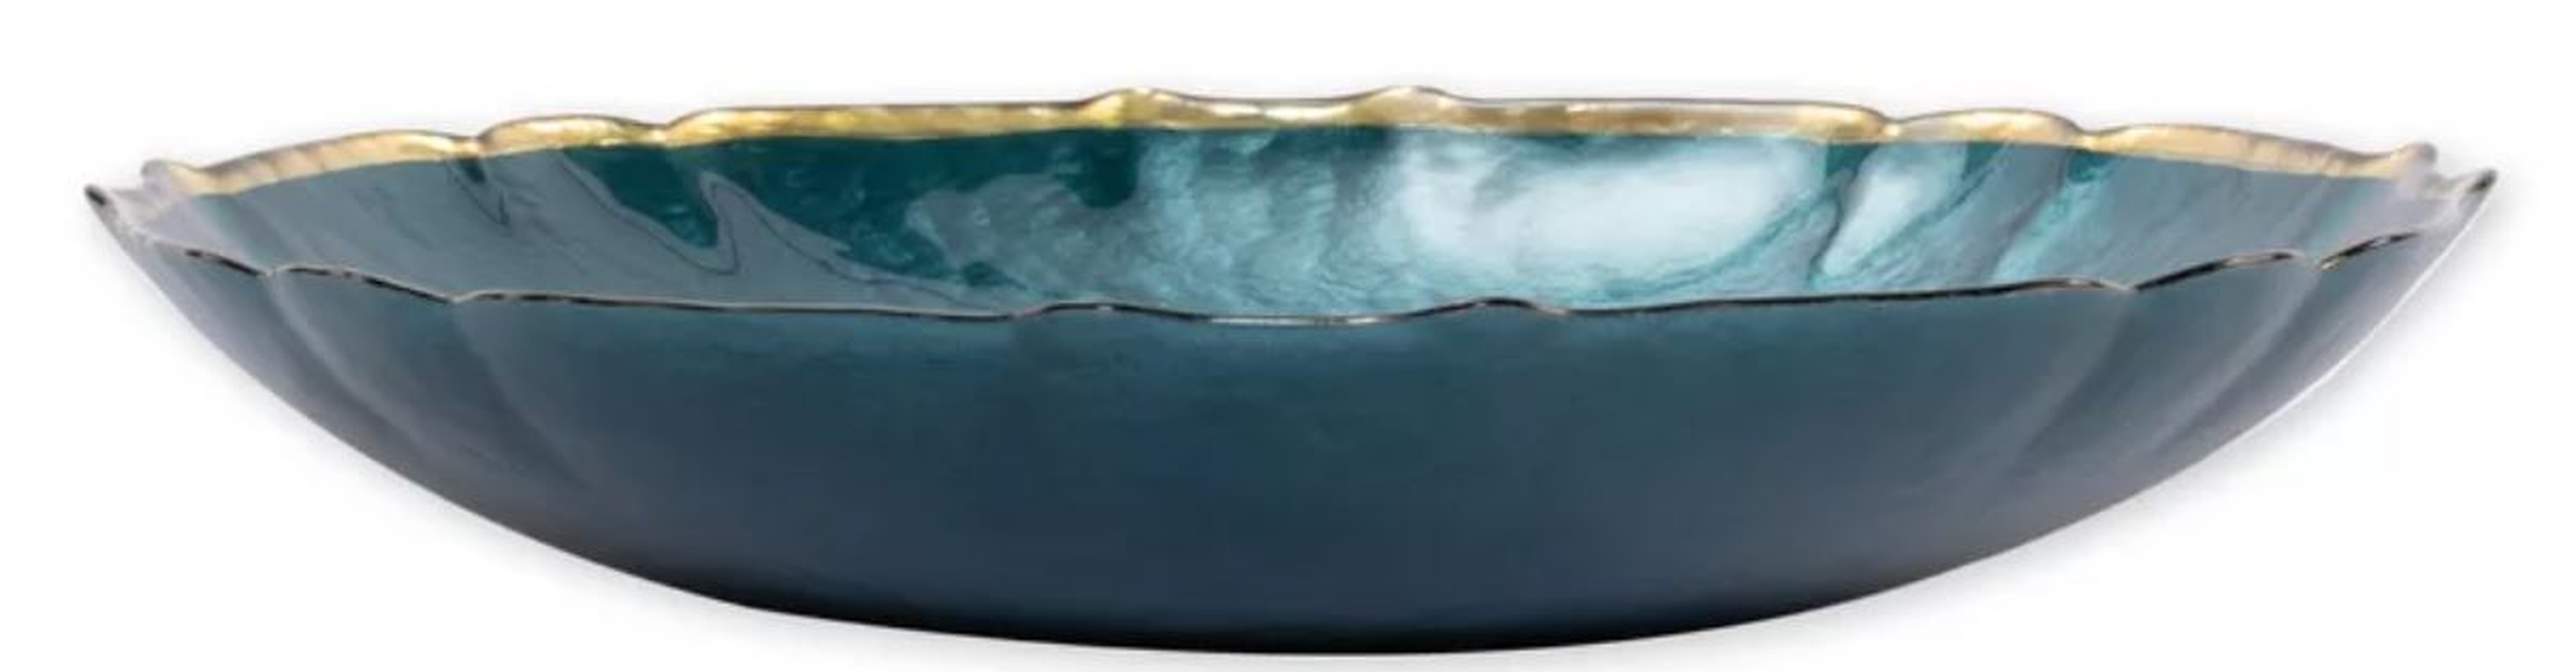 Viva by Vietri Decorative Bowl Color: Teal, Size: 2.5" H x 15.5" W x 15.75" D - Perigold